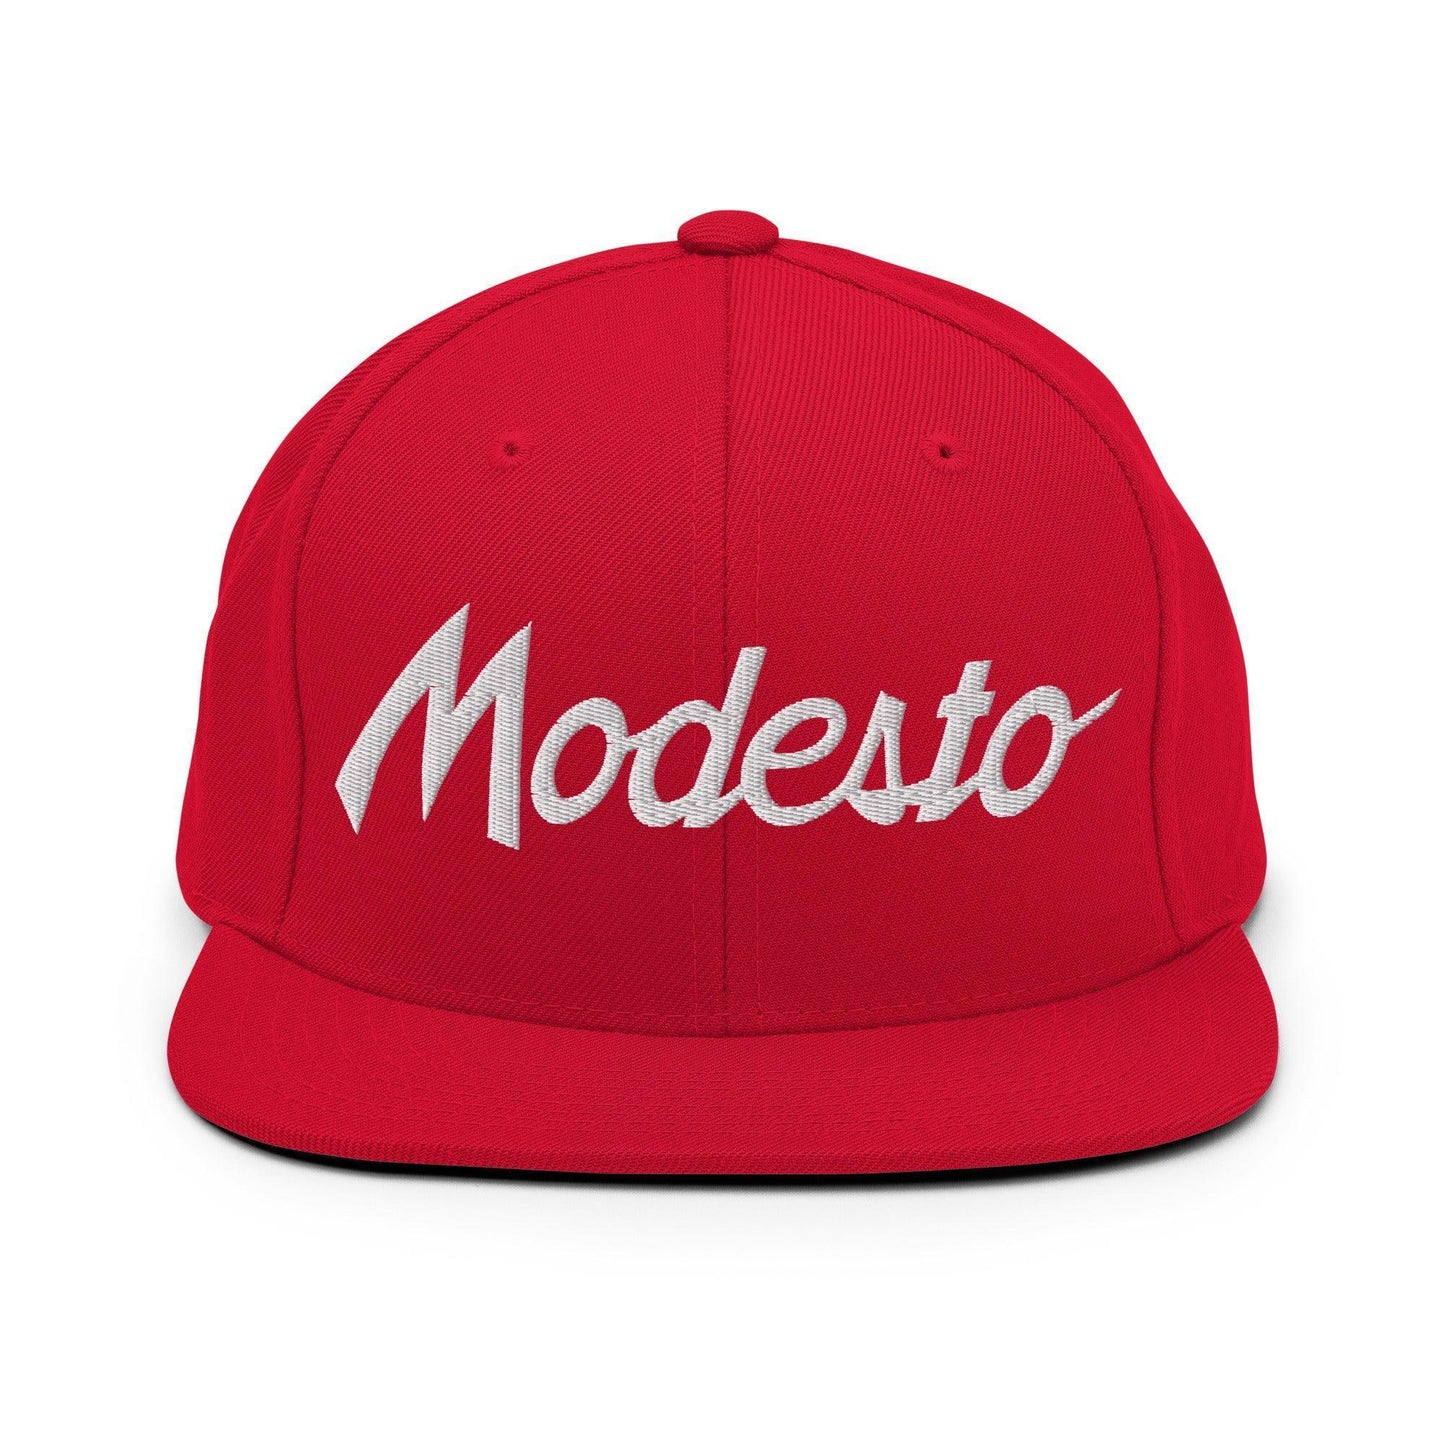 Modesto Script Snapback Hat Red